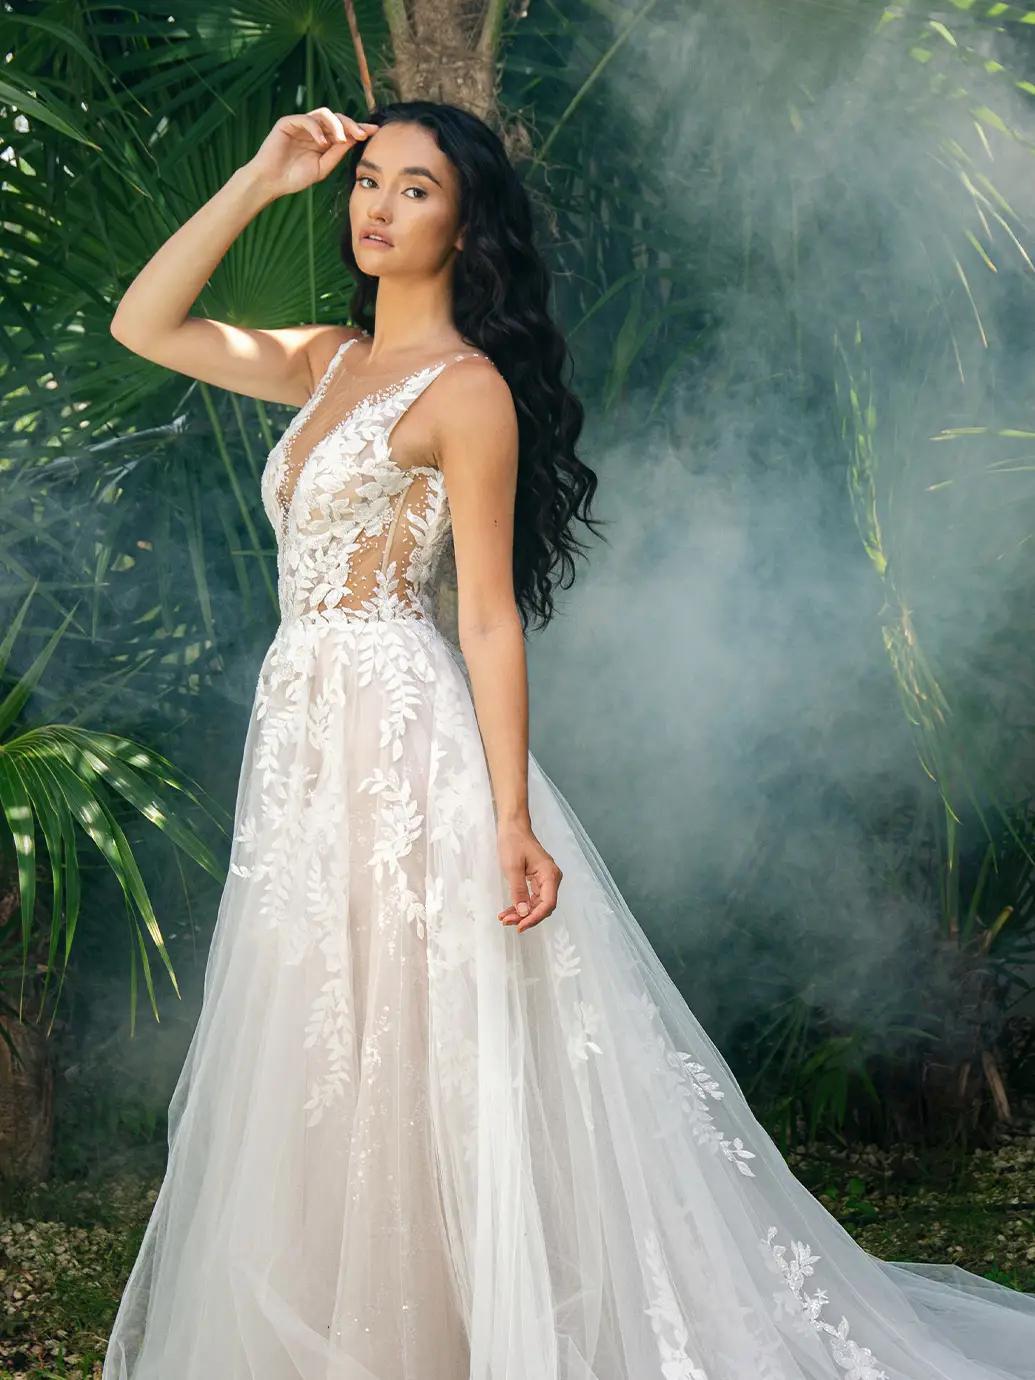 Model wearing a white gown by Enzoani